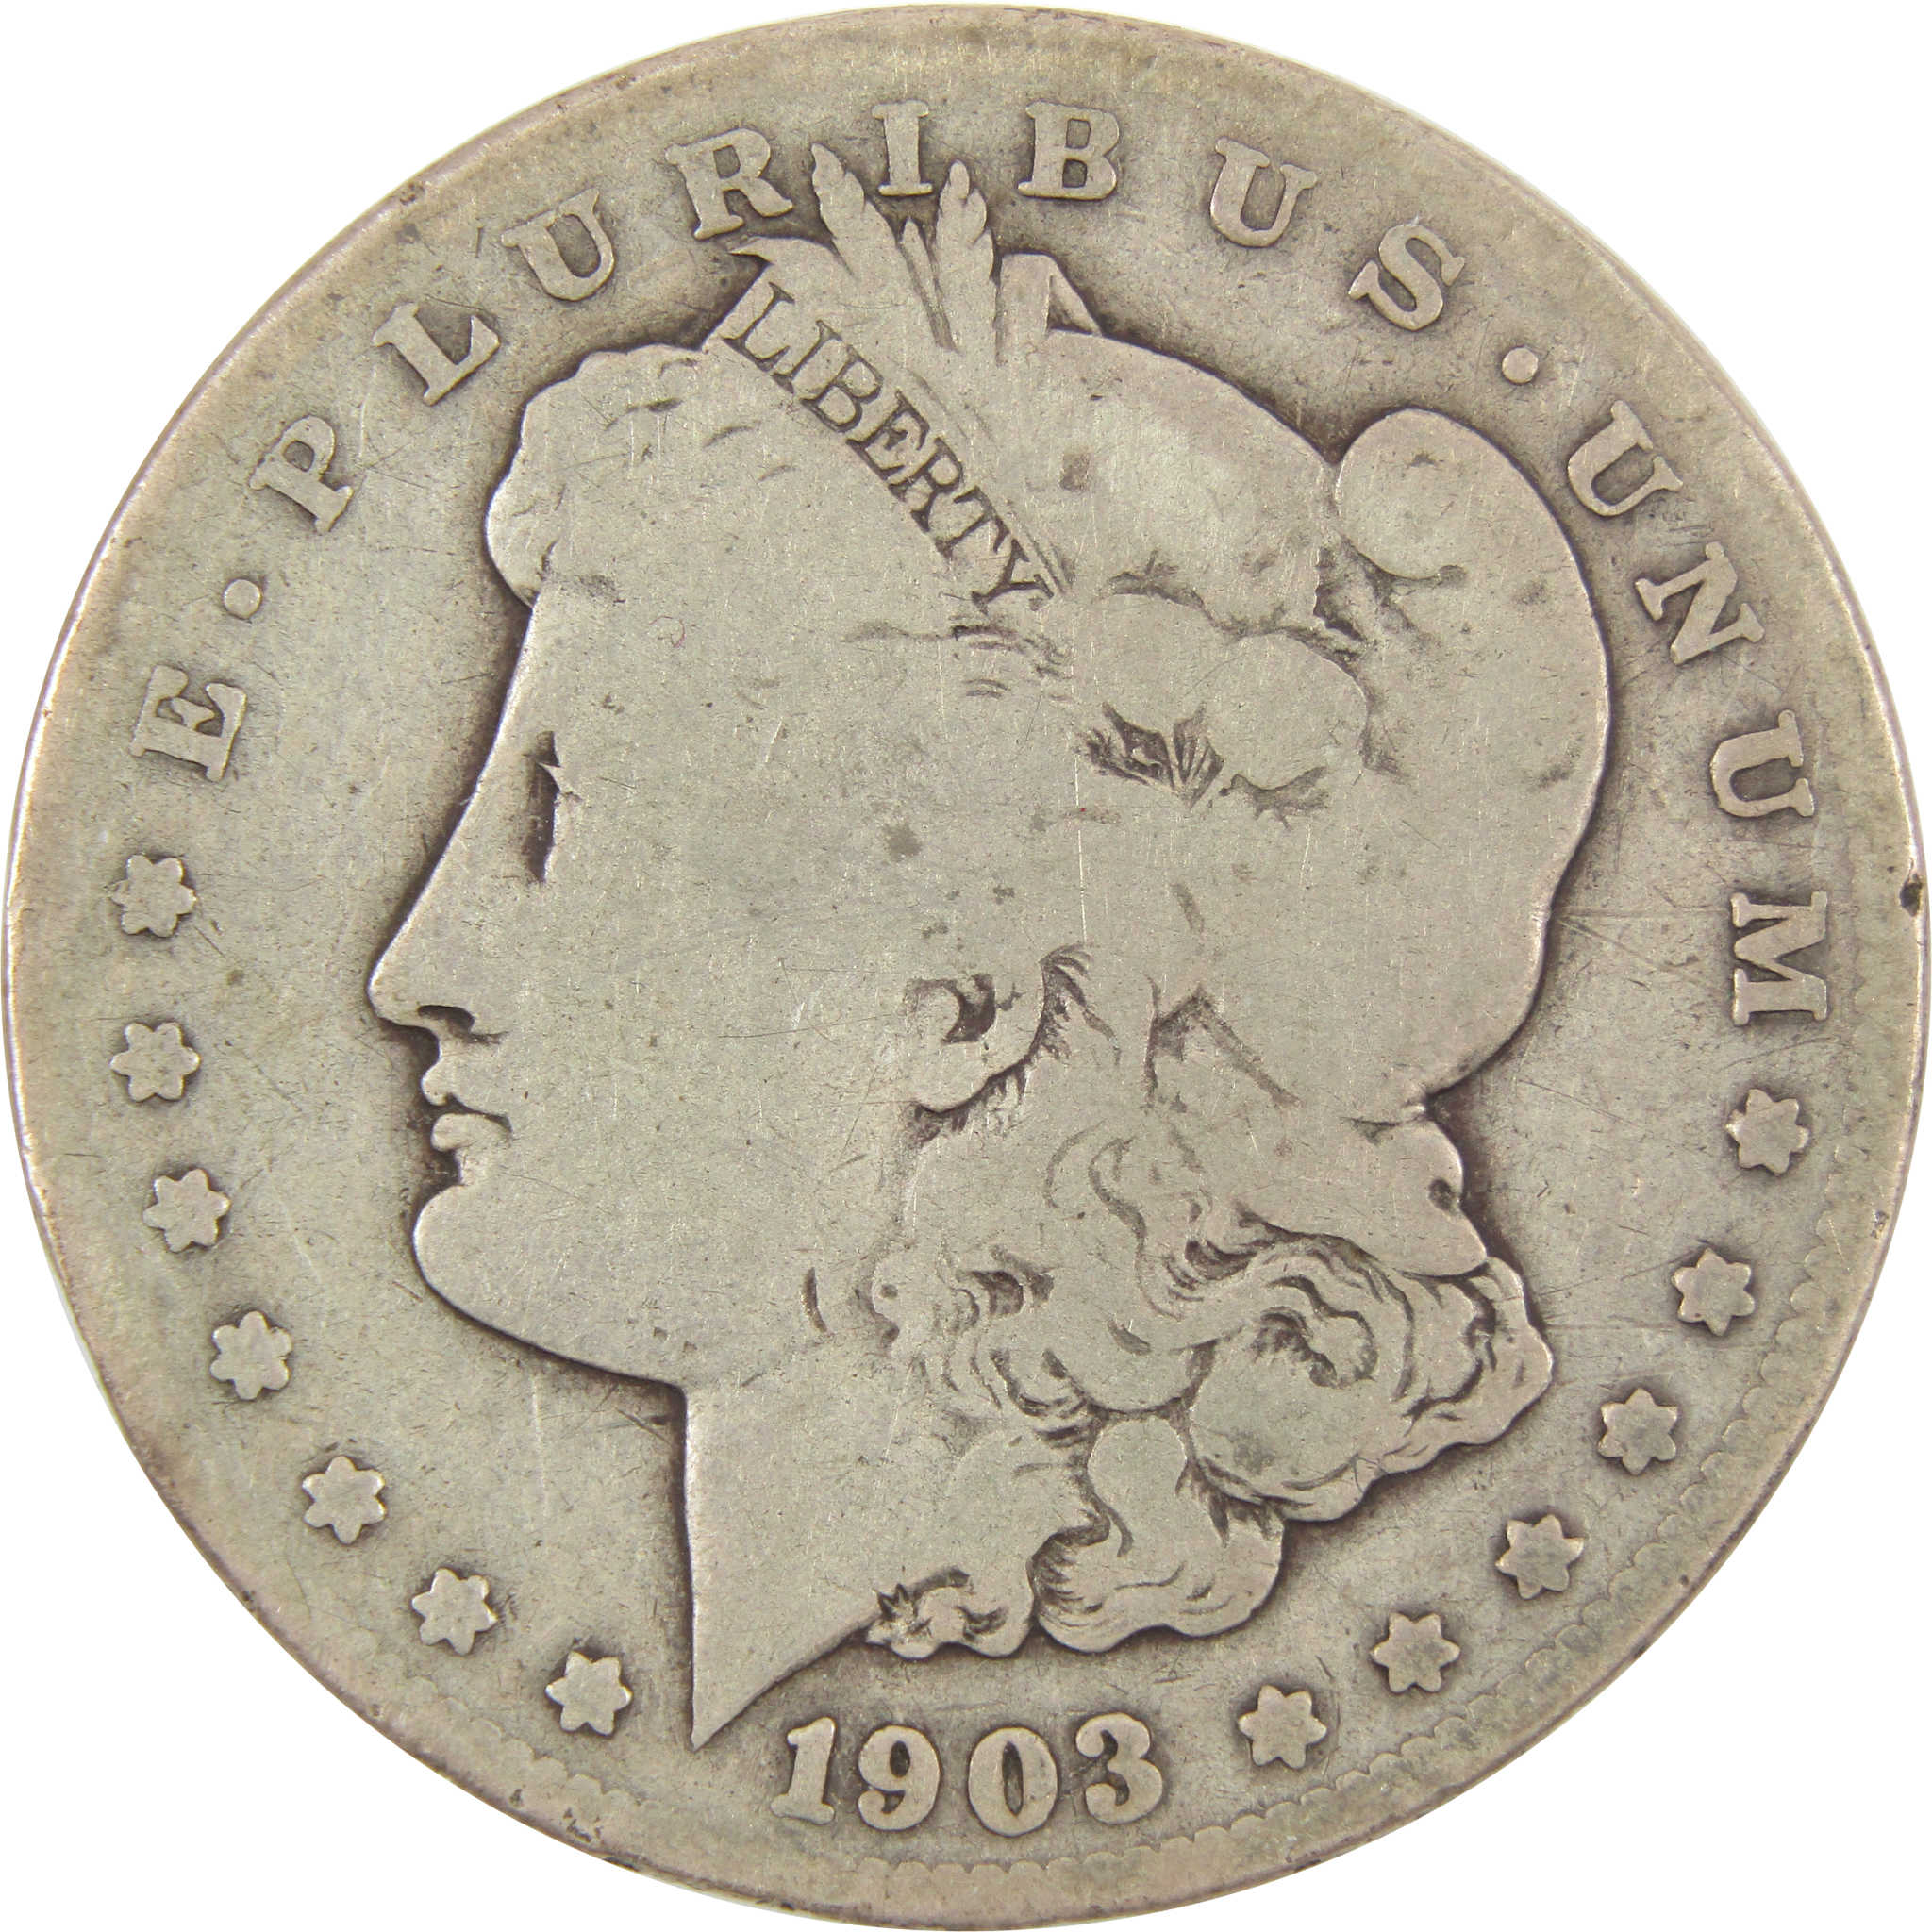 1903 S Morgan Dollar VG Very Good 90% Silver $1 Coin SKU:I7701 - Morgan coin - Morgan silver dollar - Morgan silver dollar for sale - Profile Coins &amp; Collectibles